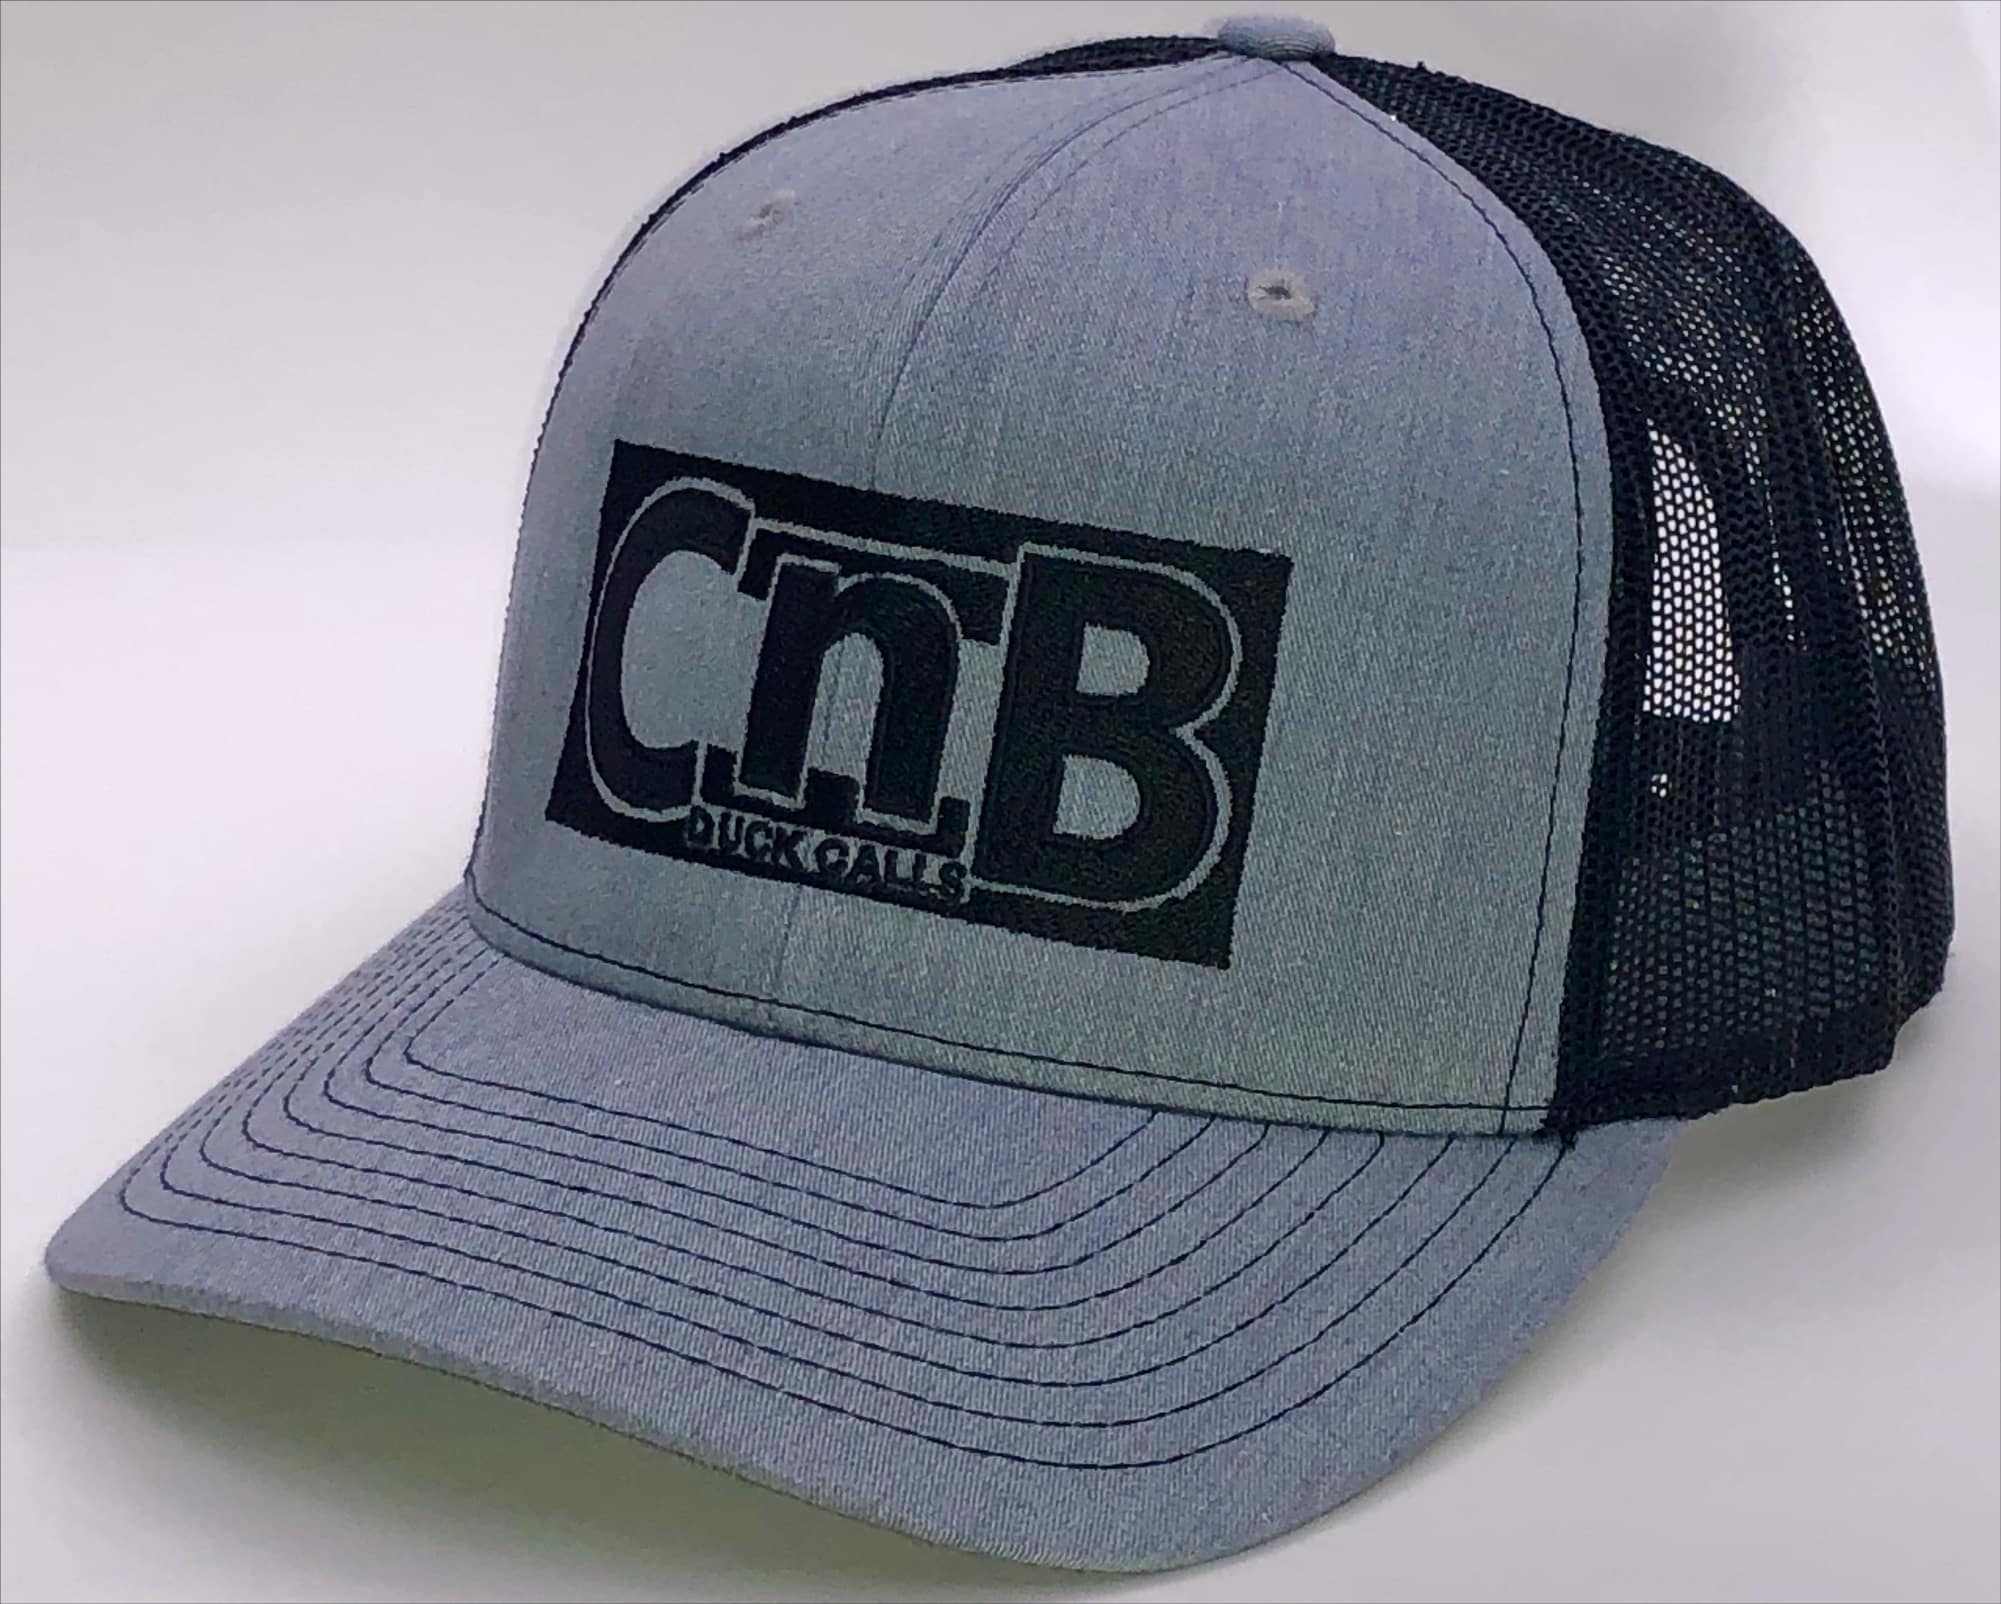 CNB DUCK CALLS HAT | Heather Gray / Black